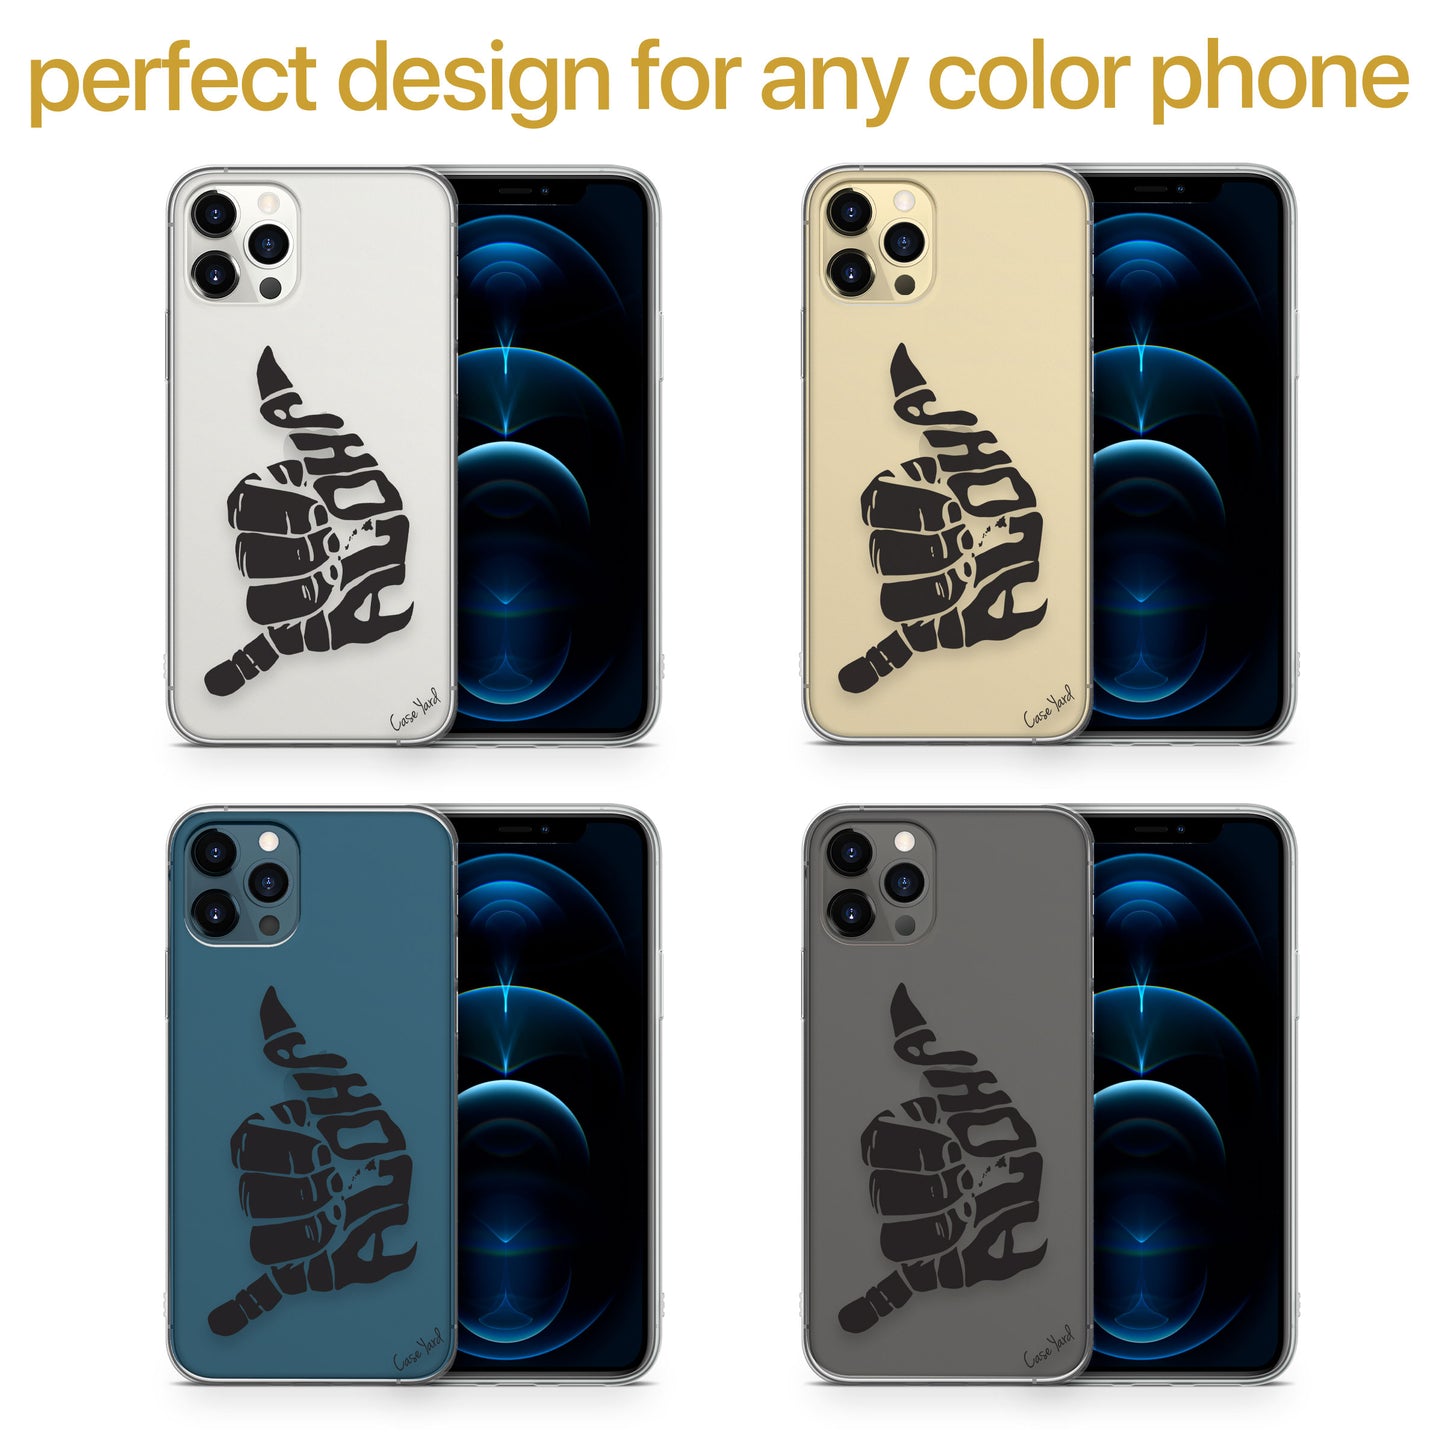 TPU Clear case with (Aloha Shaka) Design for iPhone & Samsung Phones